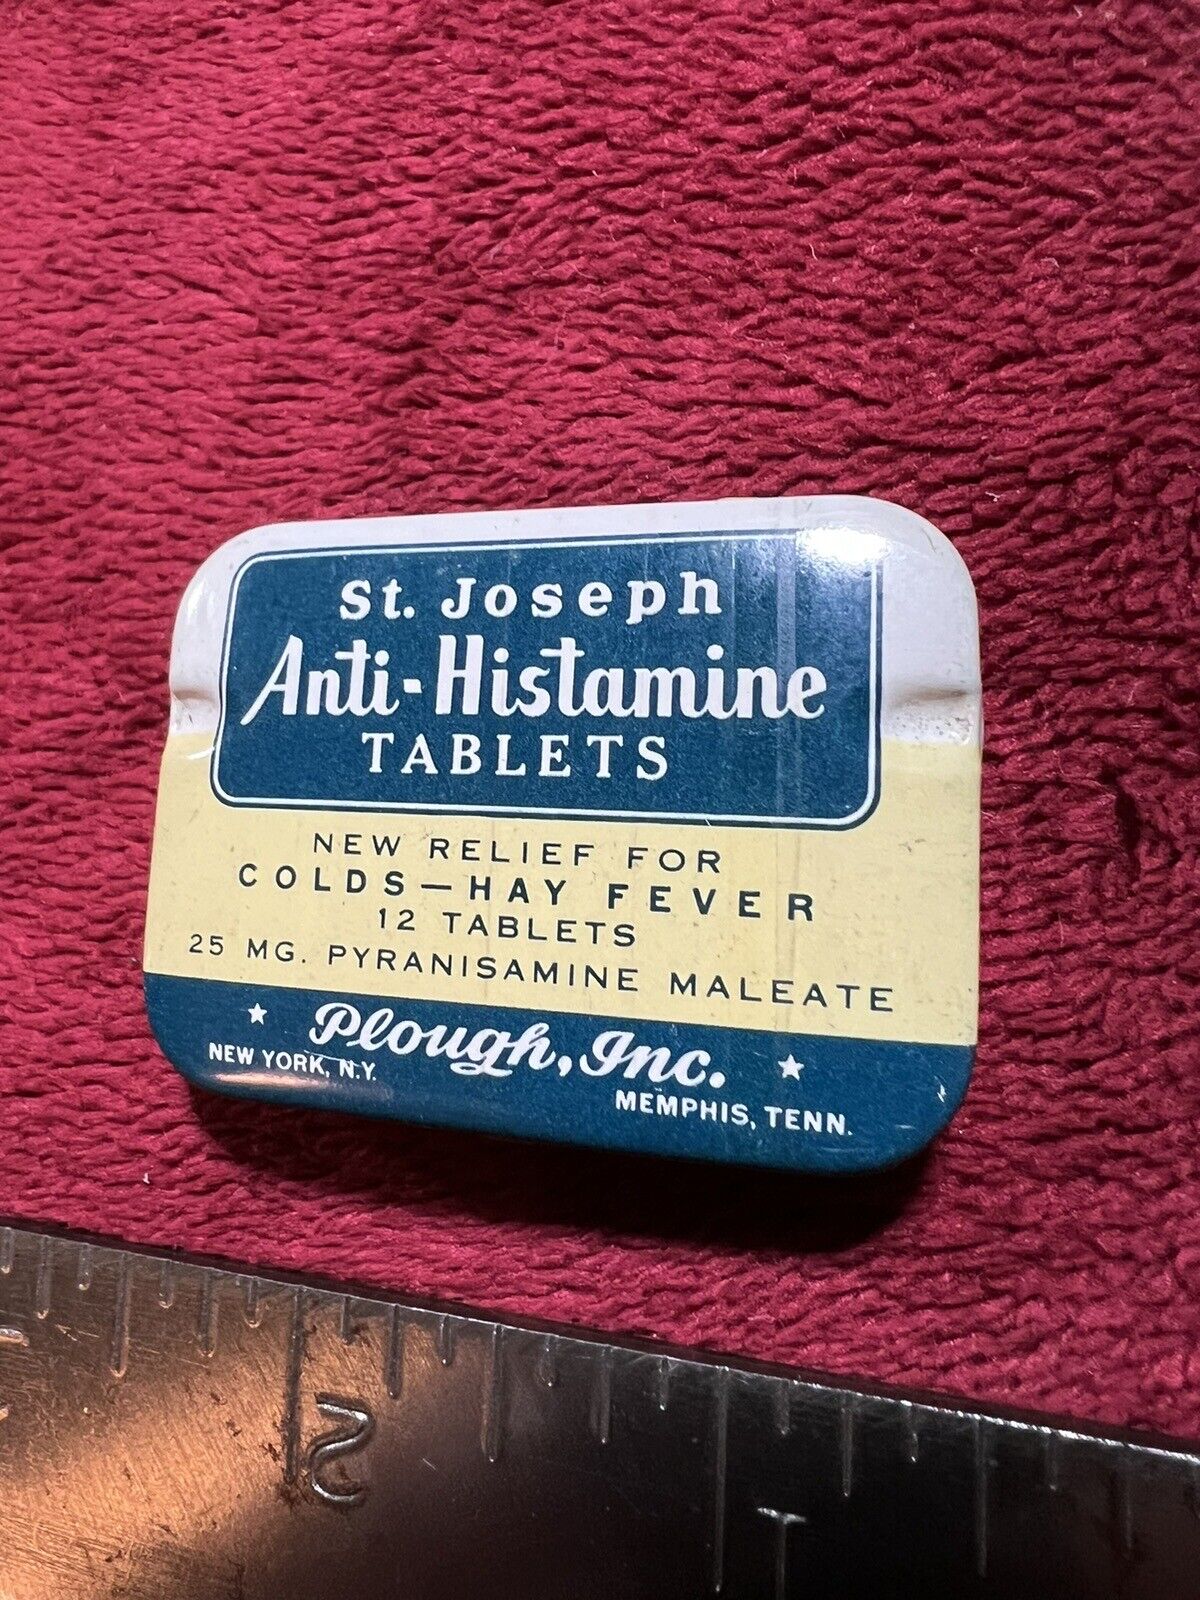 Vintage St. Joseph Anti-Histamine Aspirin Size Tin with Original Directions.